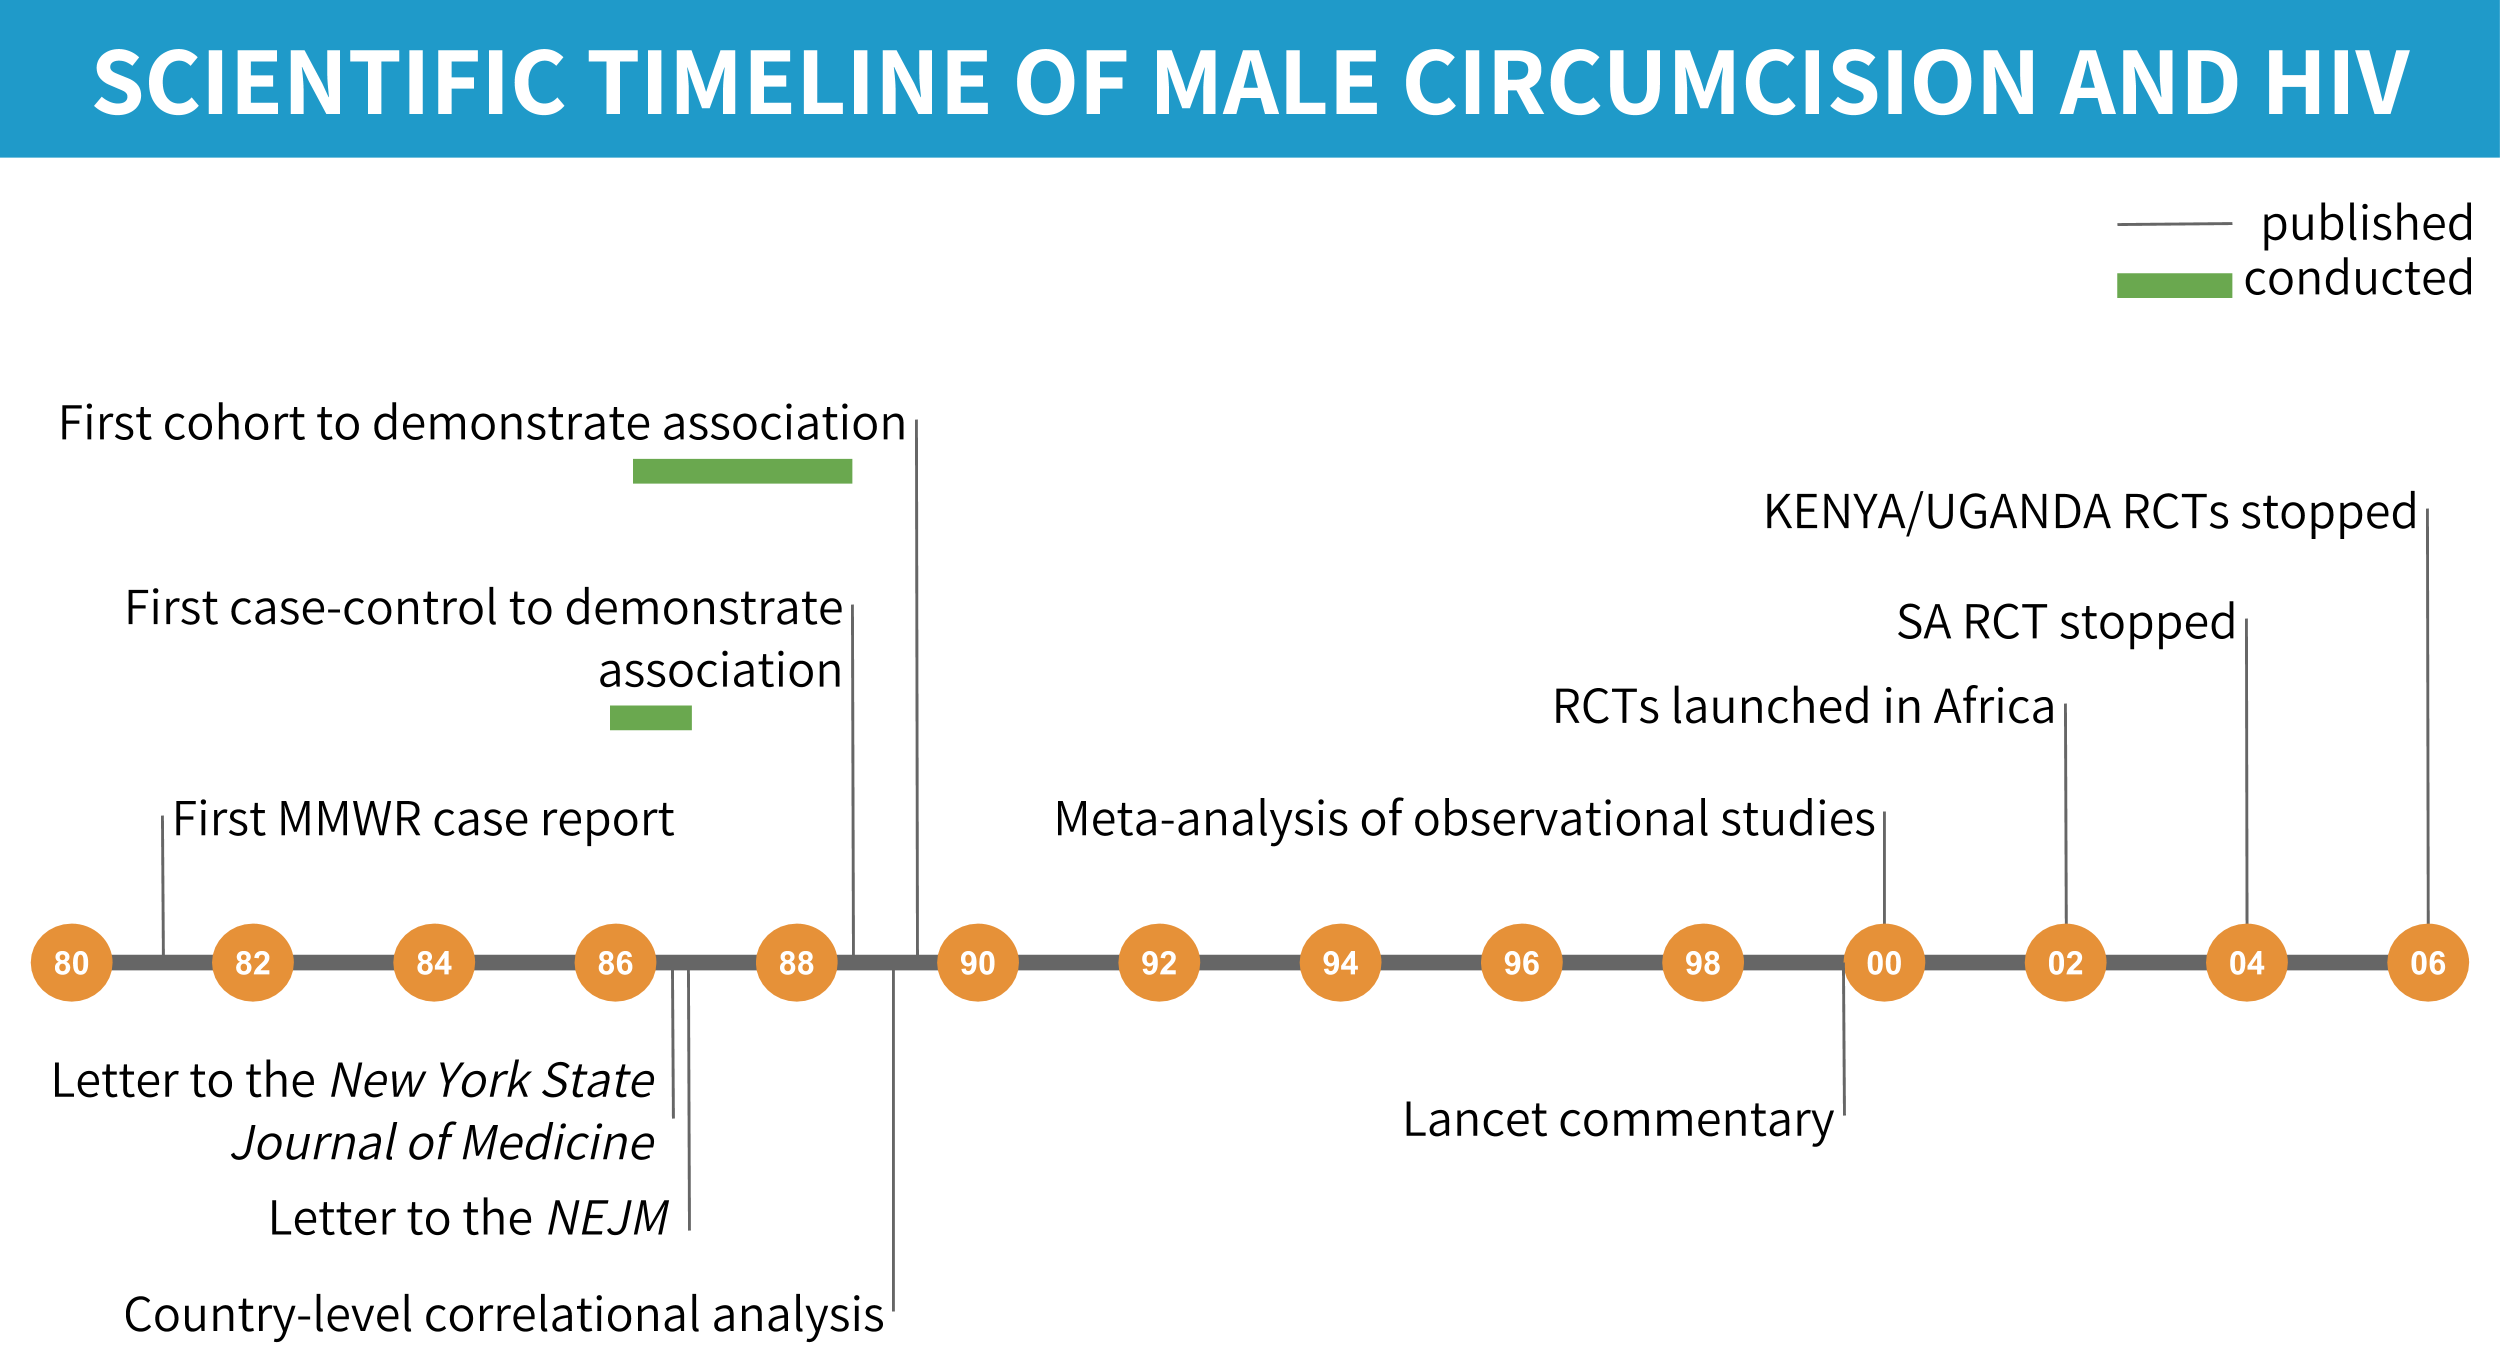 Scientific timeline of male circumcision and HIV/AIDS.